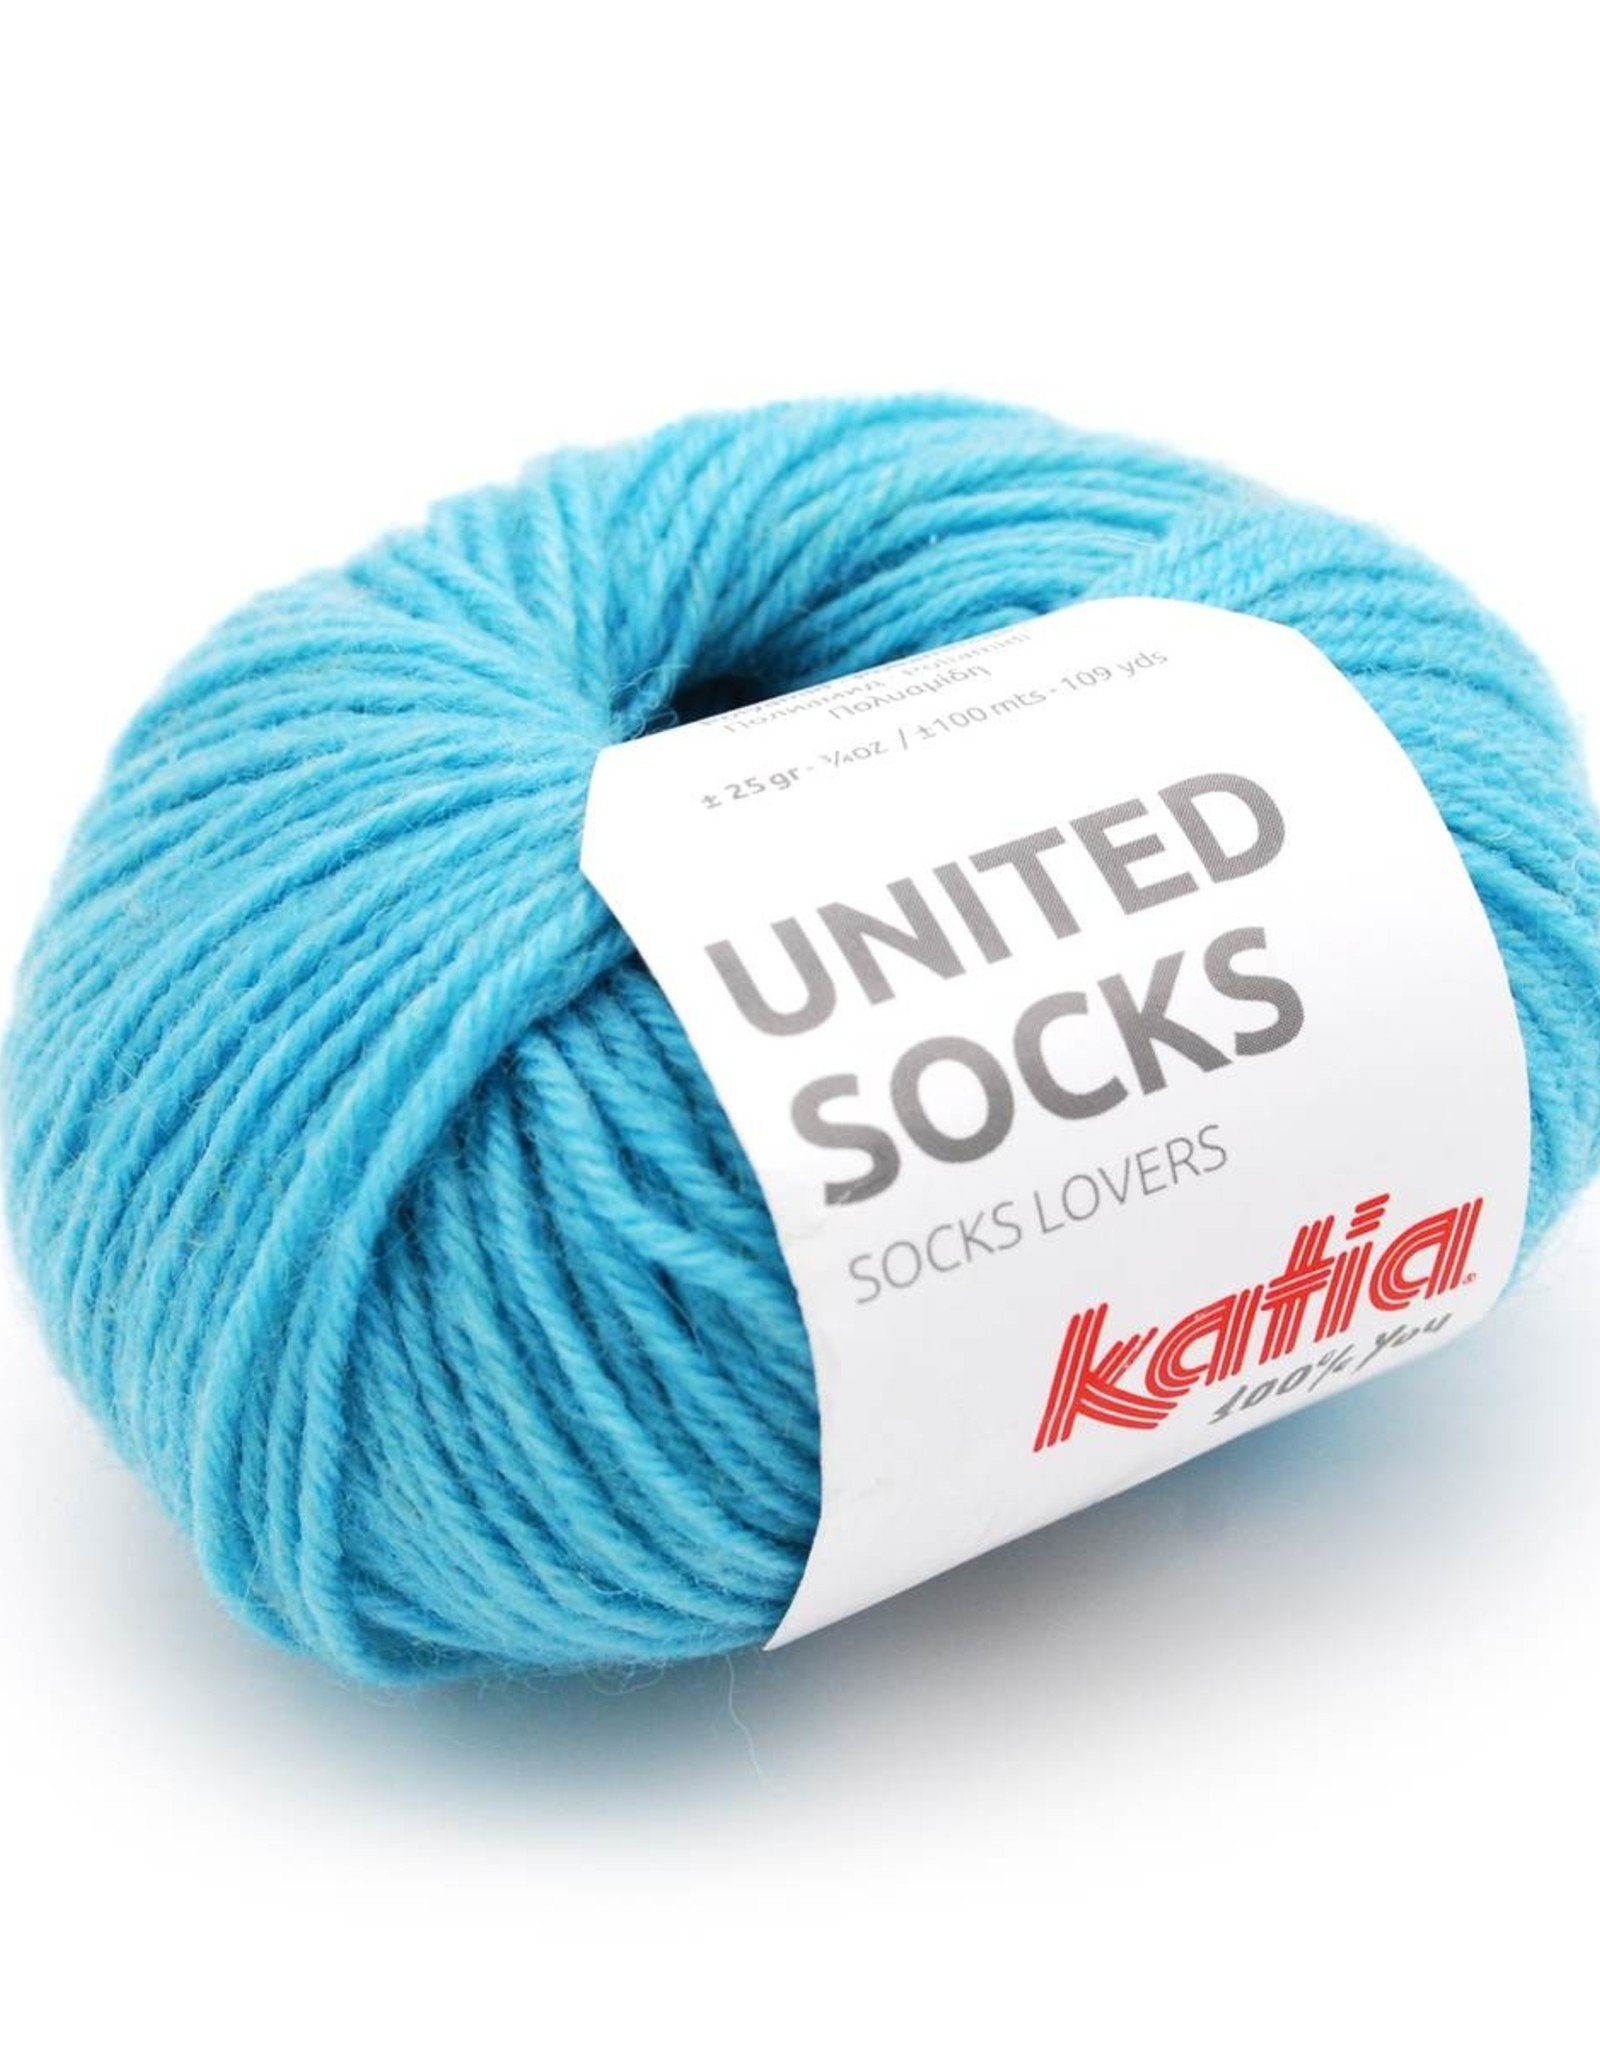 Katia United Sock